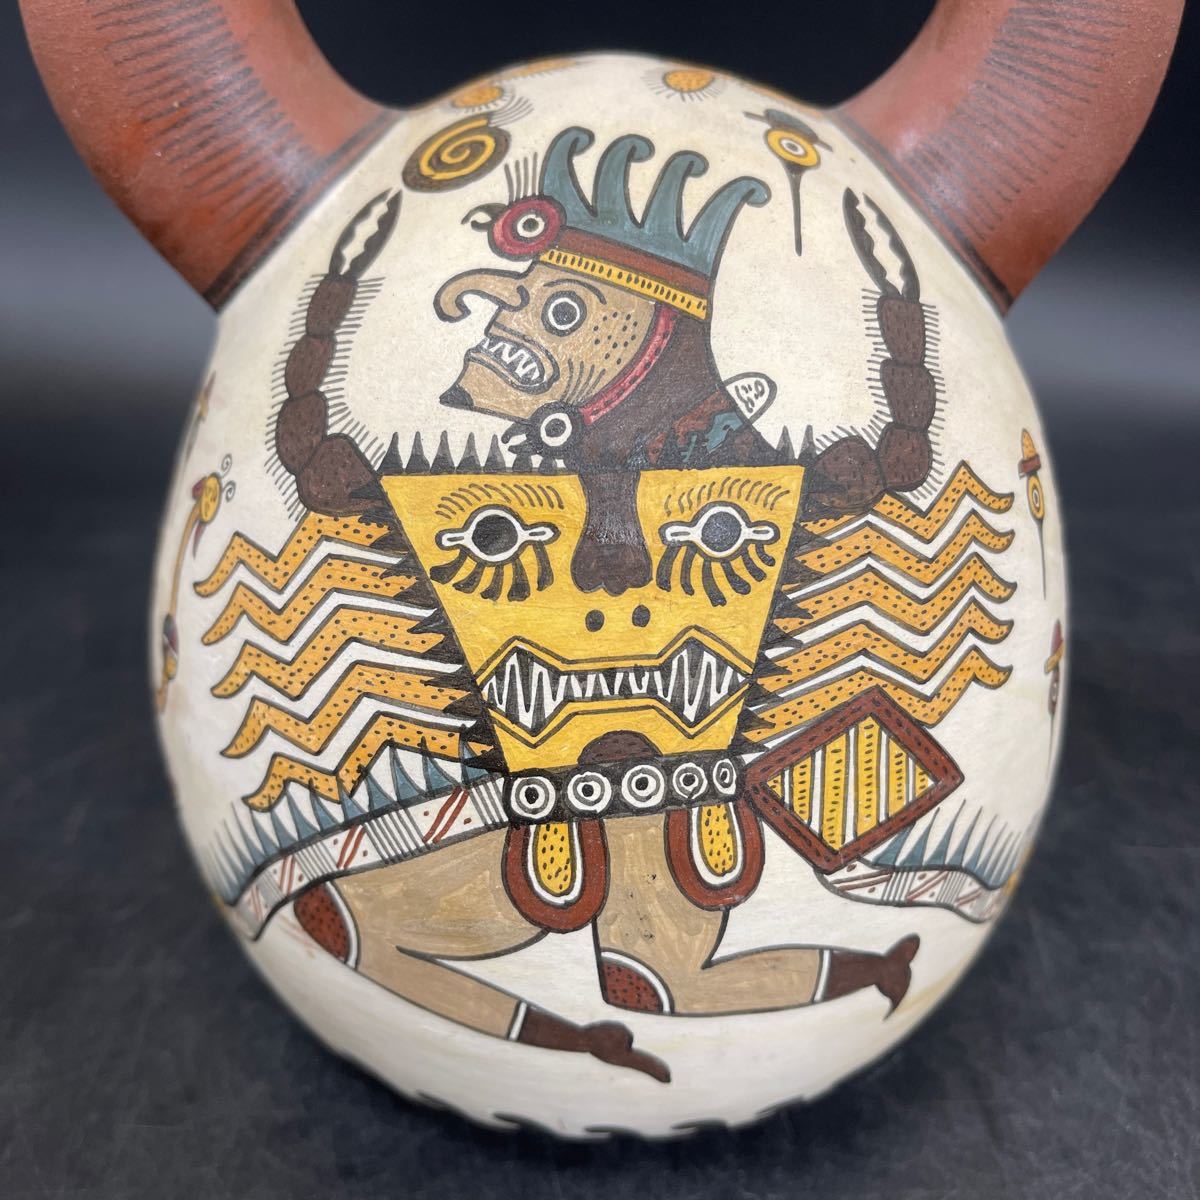 B12211706 ペルー モチェ文化土器 鐙型注口土器 インテリア チャビン文化様式から続く鐙形注口を持つ細くすっきりした印象の平底球形の土器_画像2